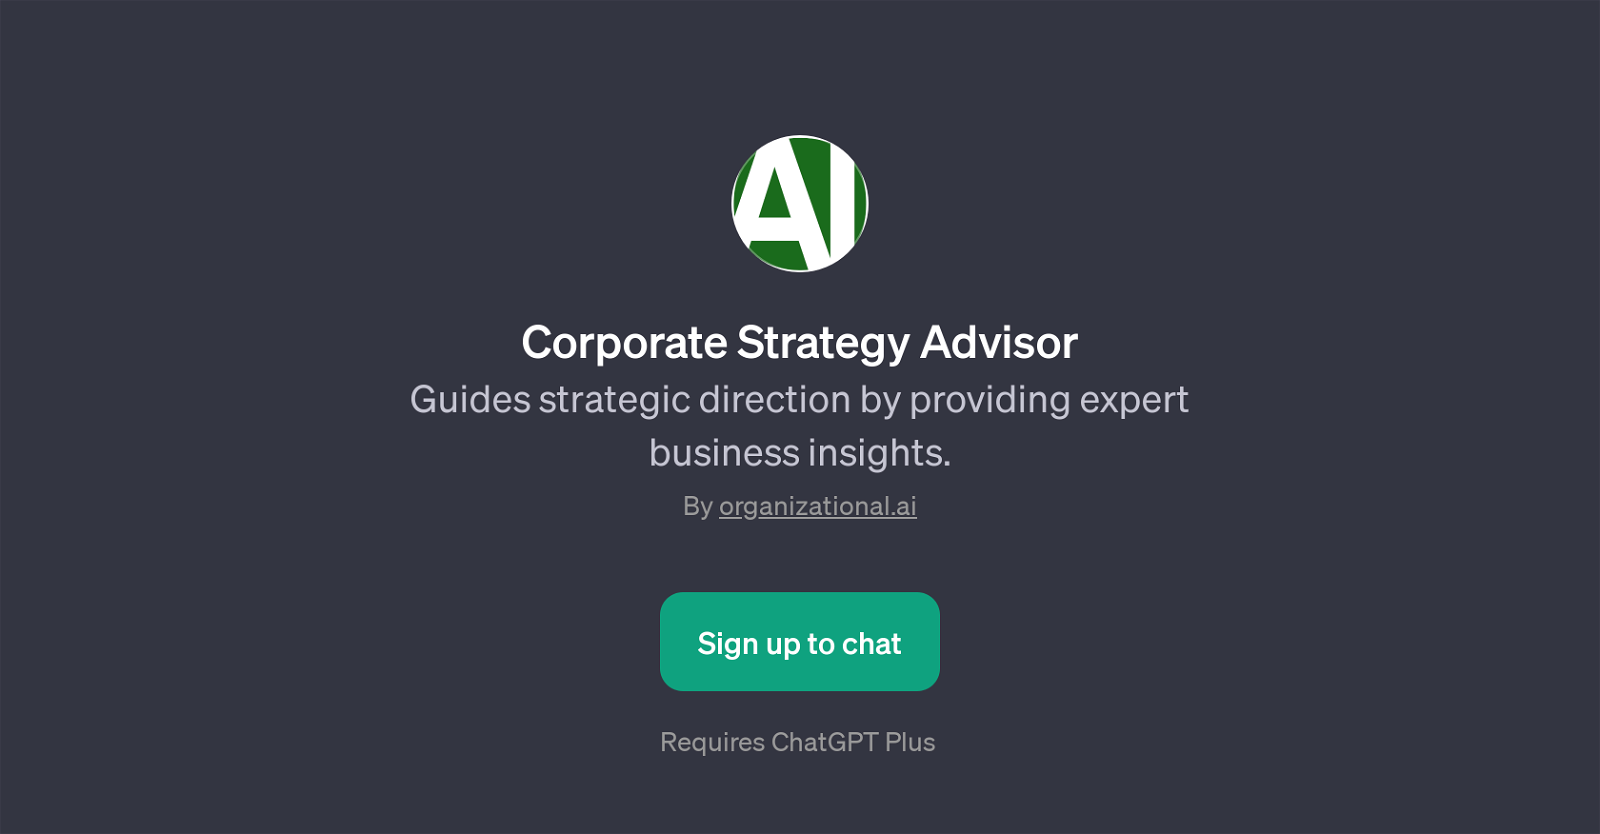 Corporate Strategy Advisor website